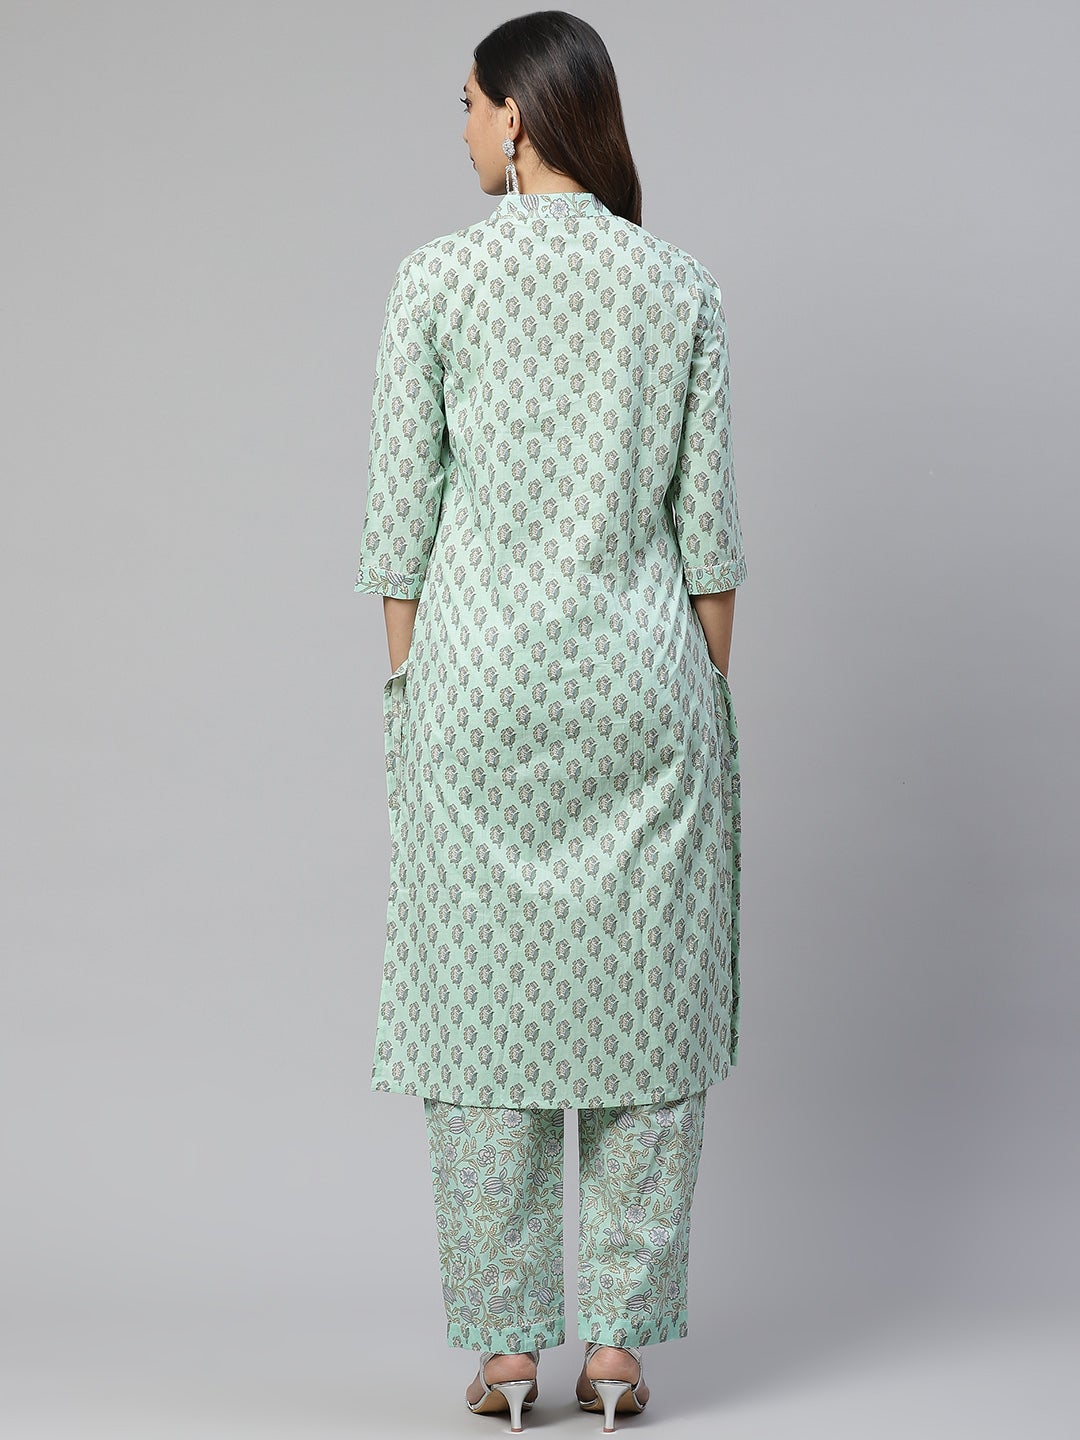 Sea Green Cotton Printed Kurti Pant Set Plus size